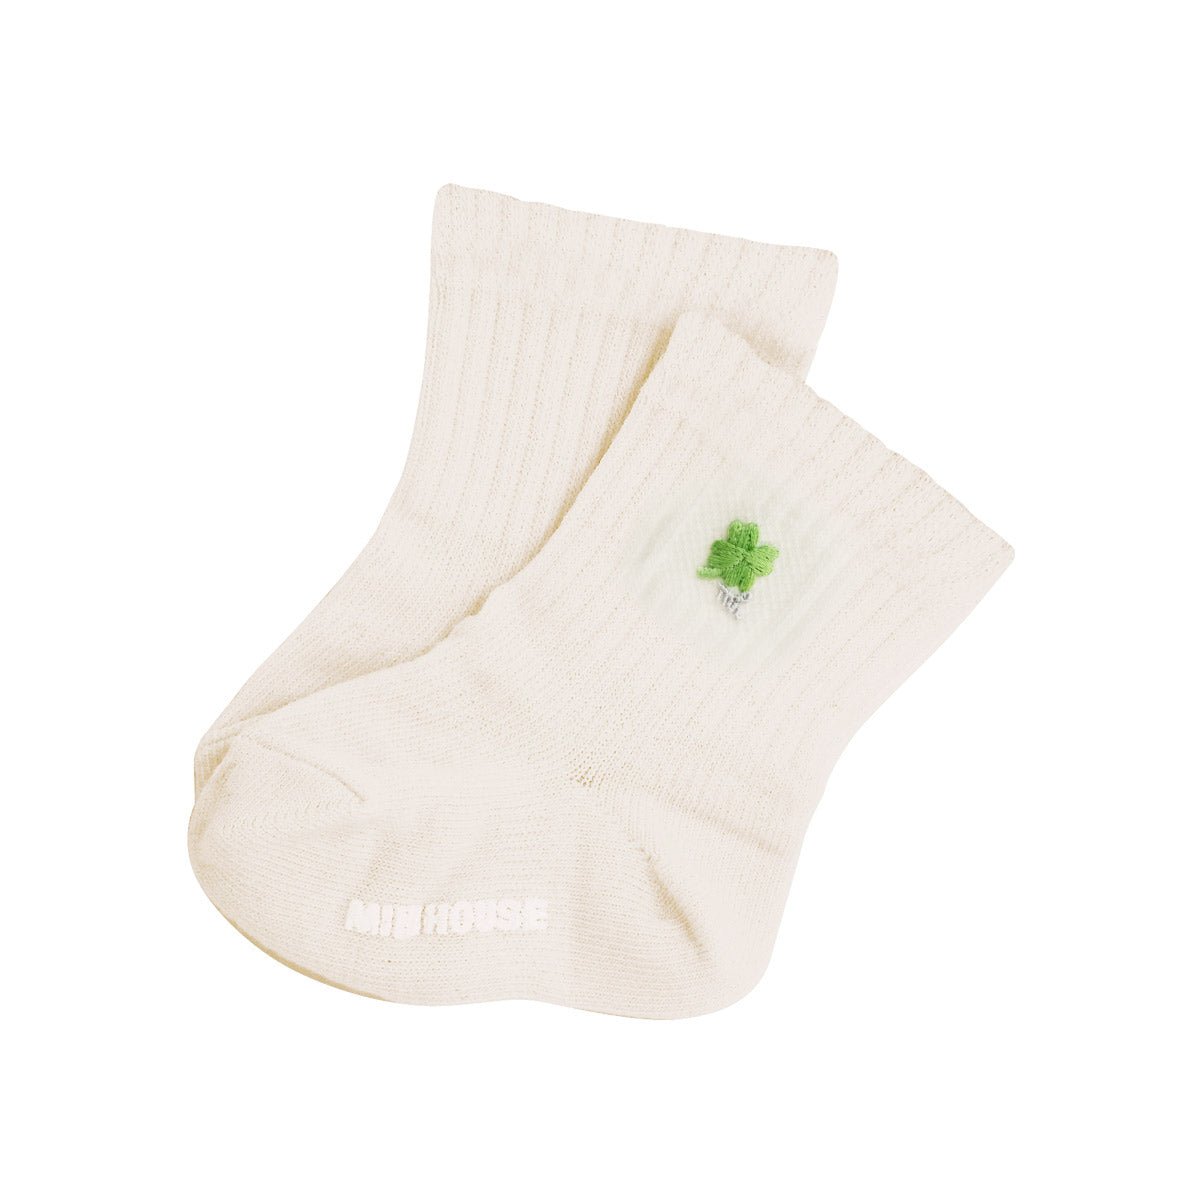 Clover Embroidered Baby socks - MIKI HOUSE USA